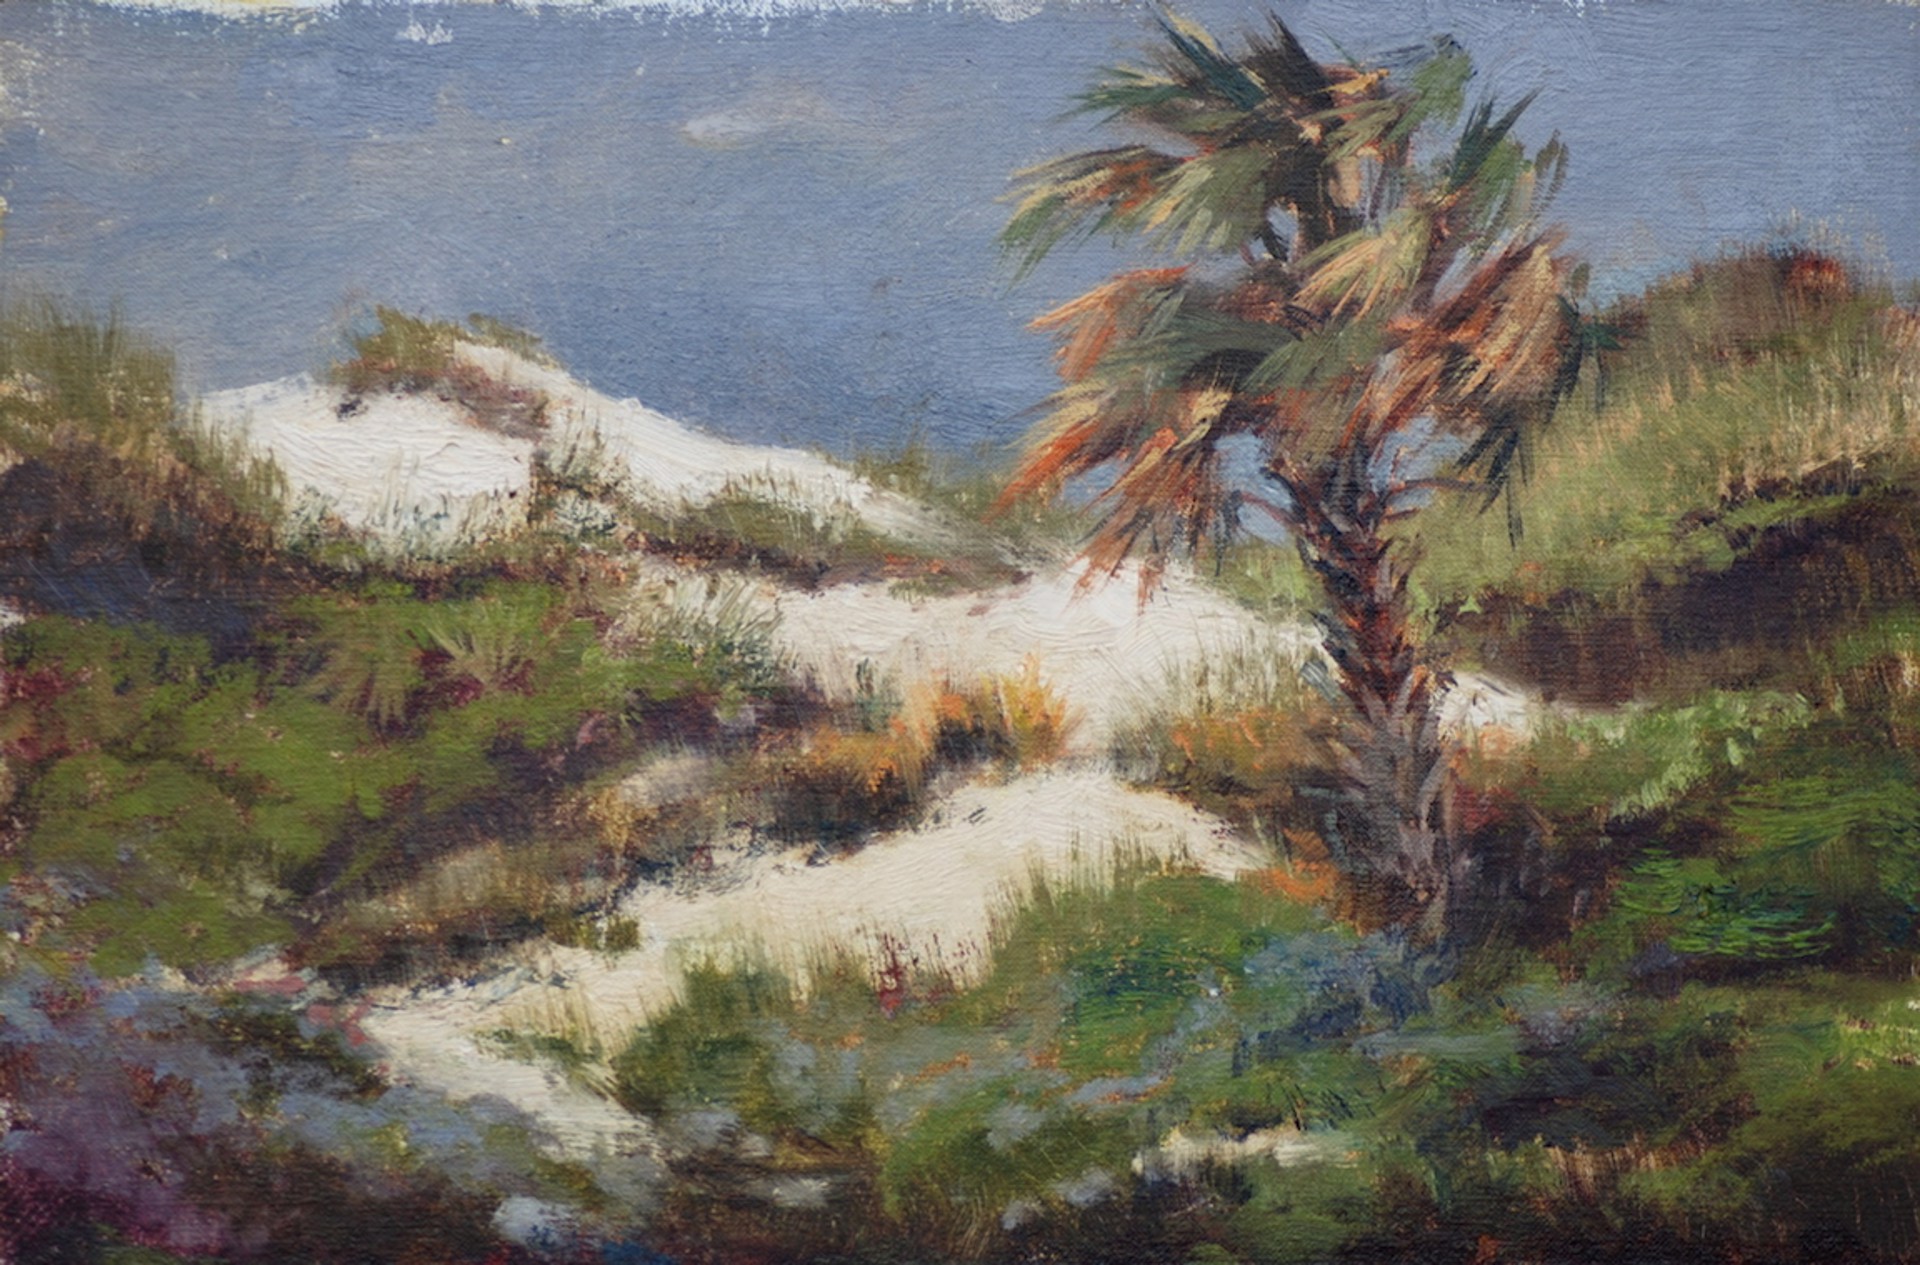 Sandblast by Mary Erickson